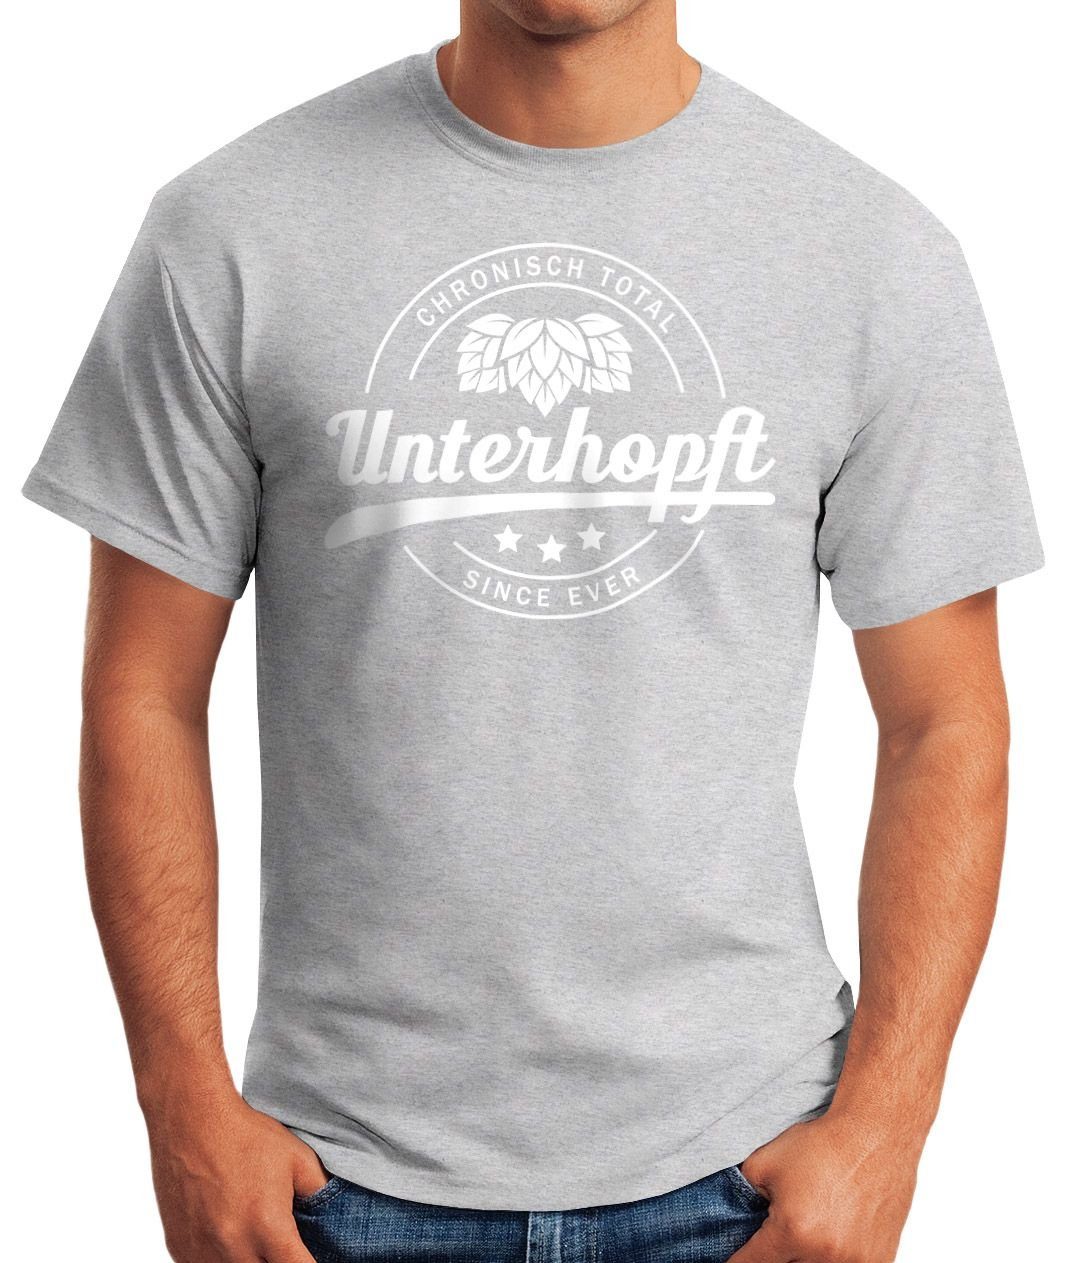 MoonWorks Unterhopft Fun-Shirt Print-Shirt Moonworks® Print T-Shirt Chronisch Since Herren Total grau mit Ever